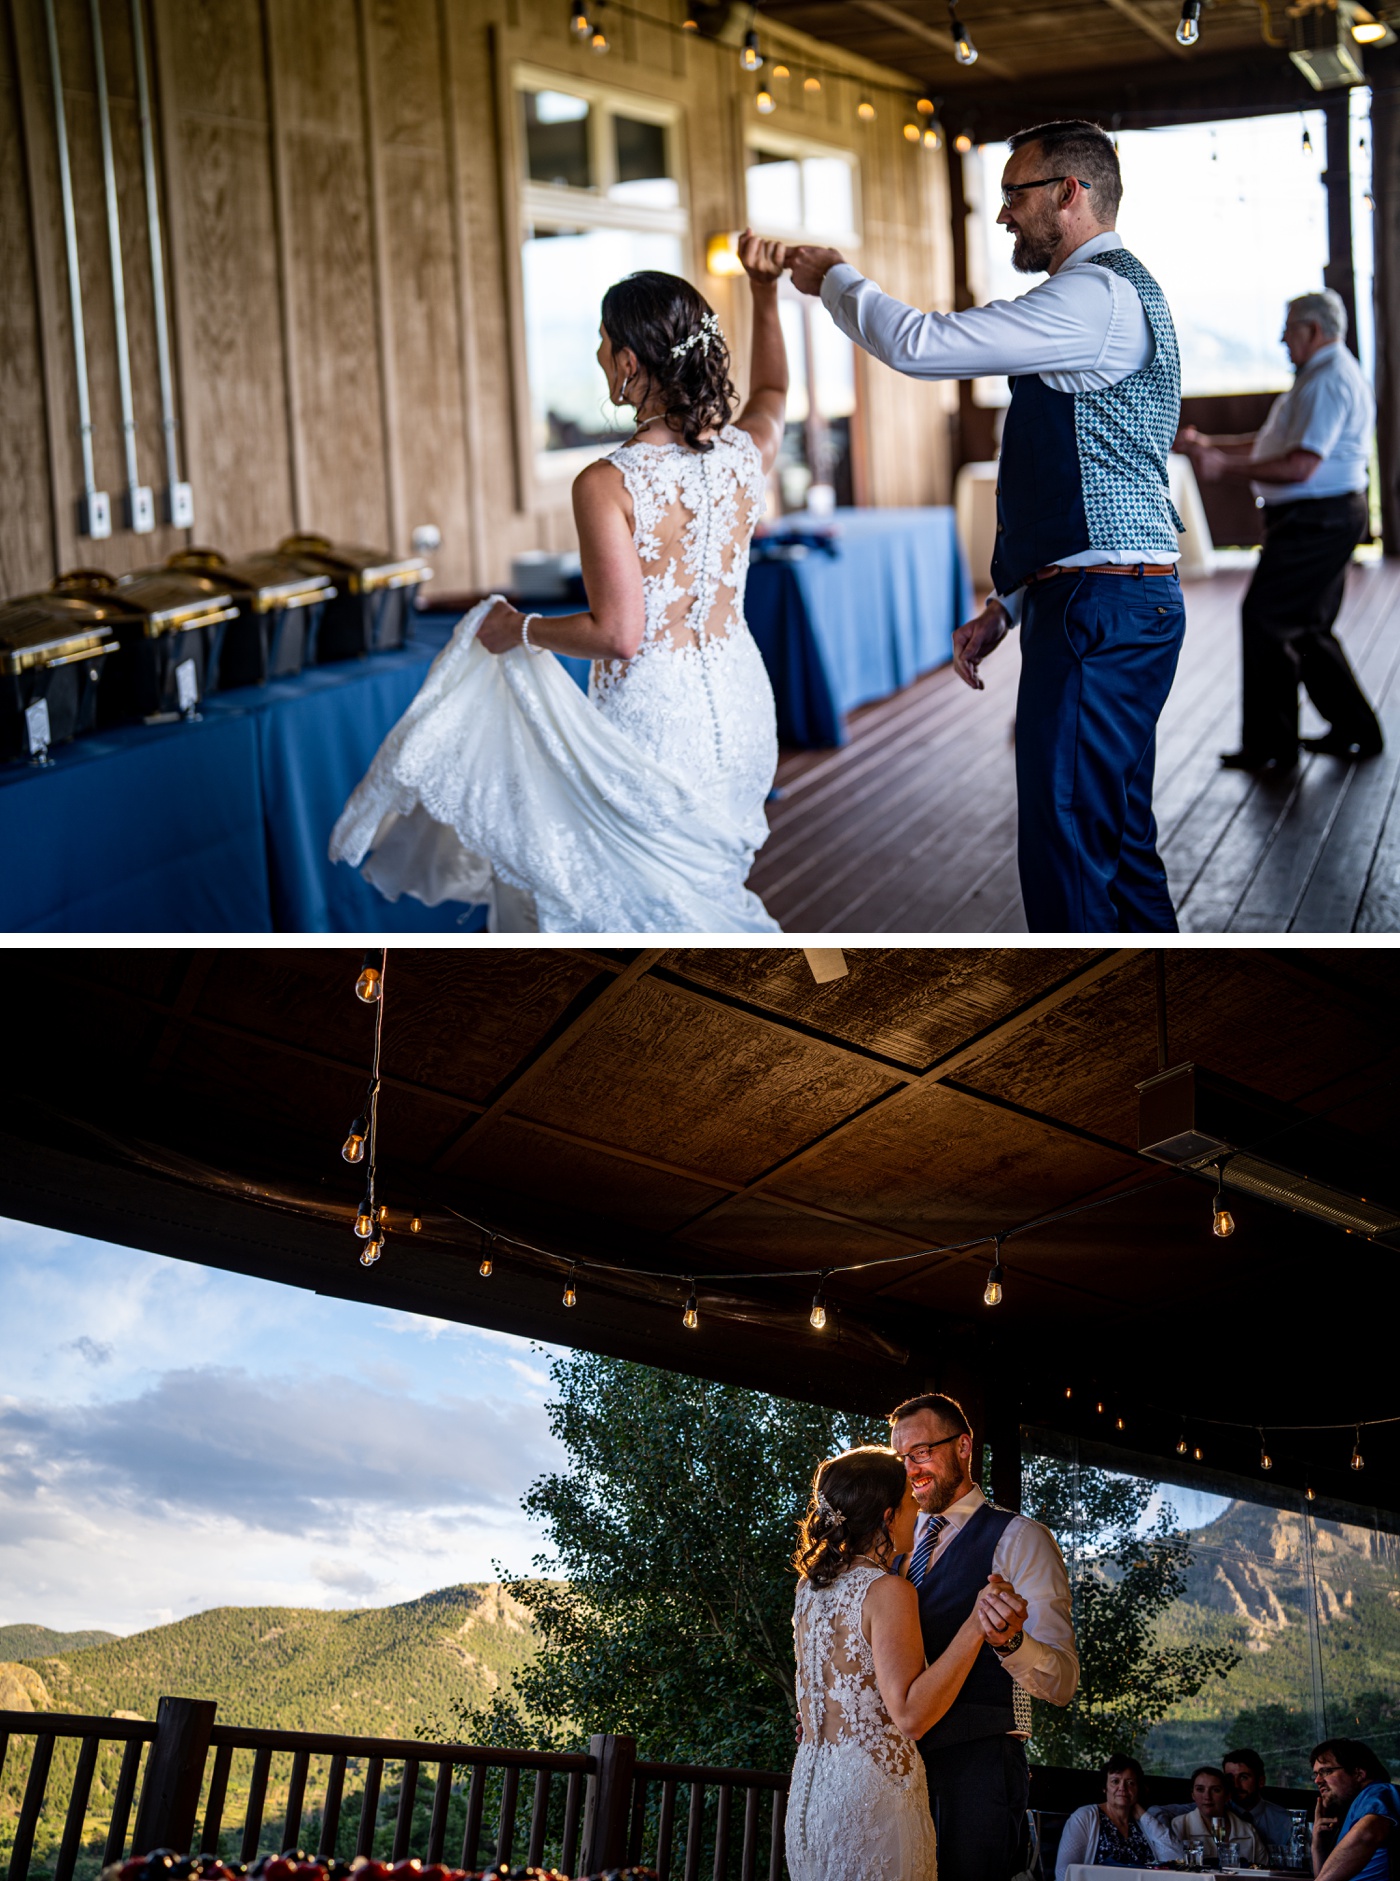 Outdoor wedding reception at Taharaa Mountain Lodge